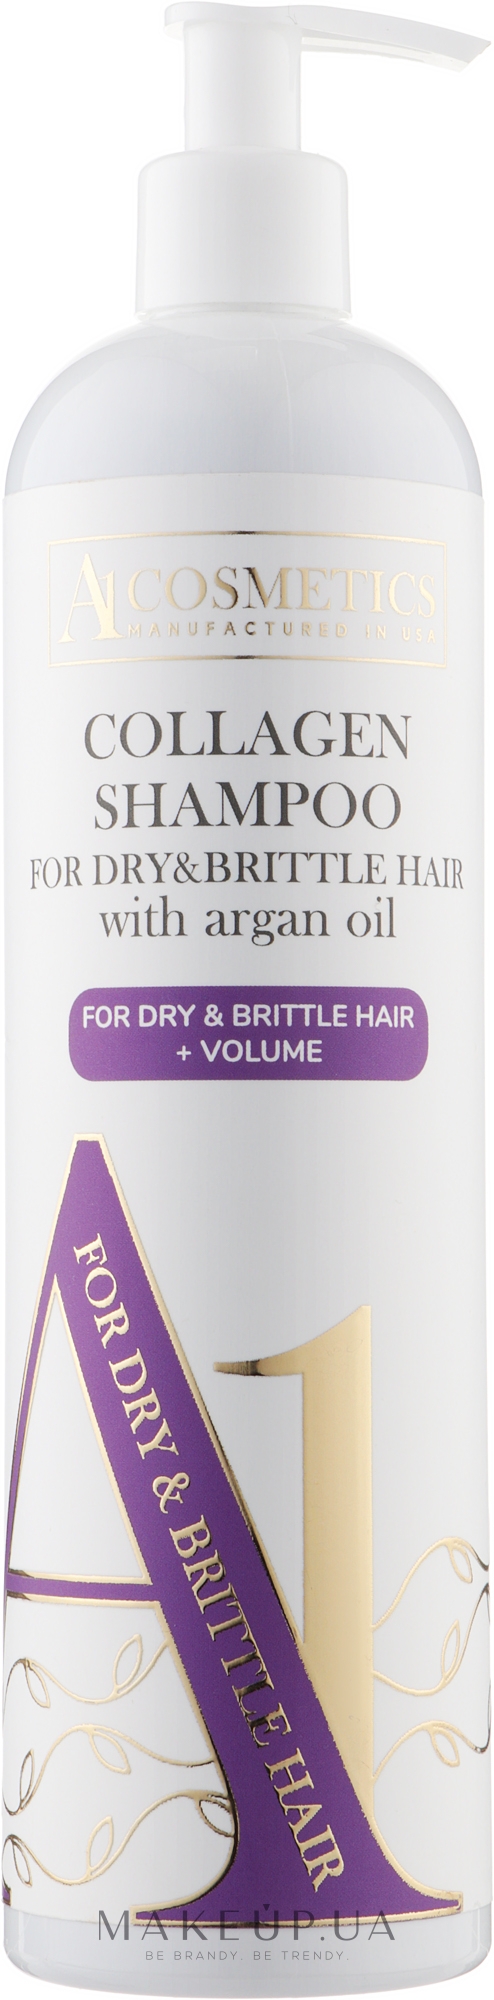 Коллагеновый шампунь для сухих и ломких волос - A1 Cosmetics For Dry & Brittle Hair Collagen Shampoo With Argan Oil + Volume — фото 500ml